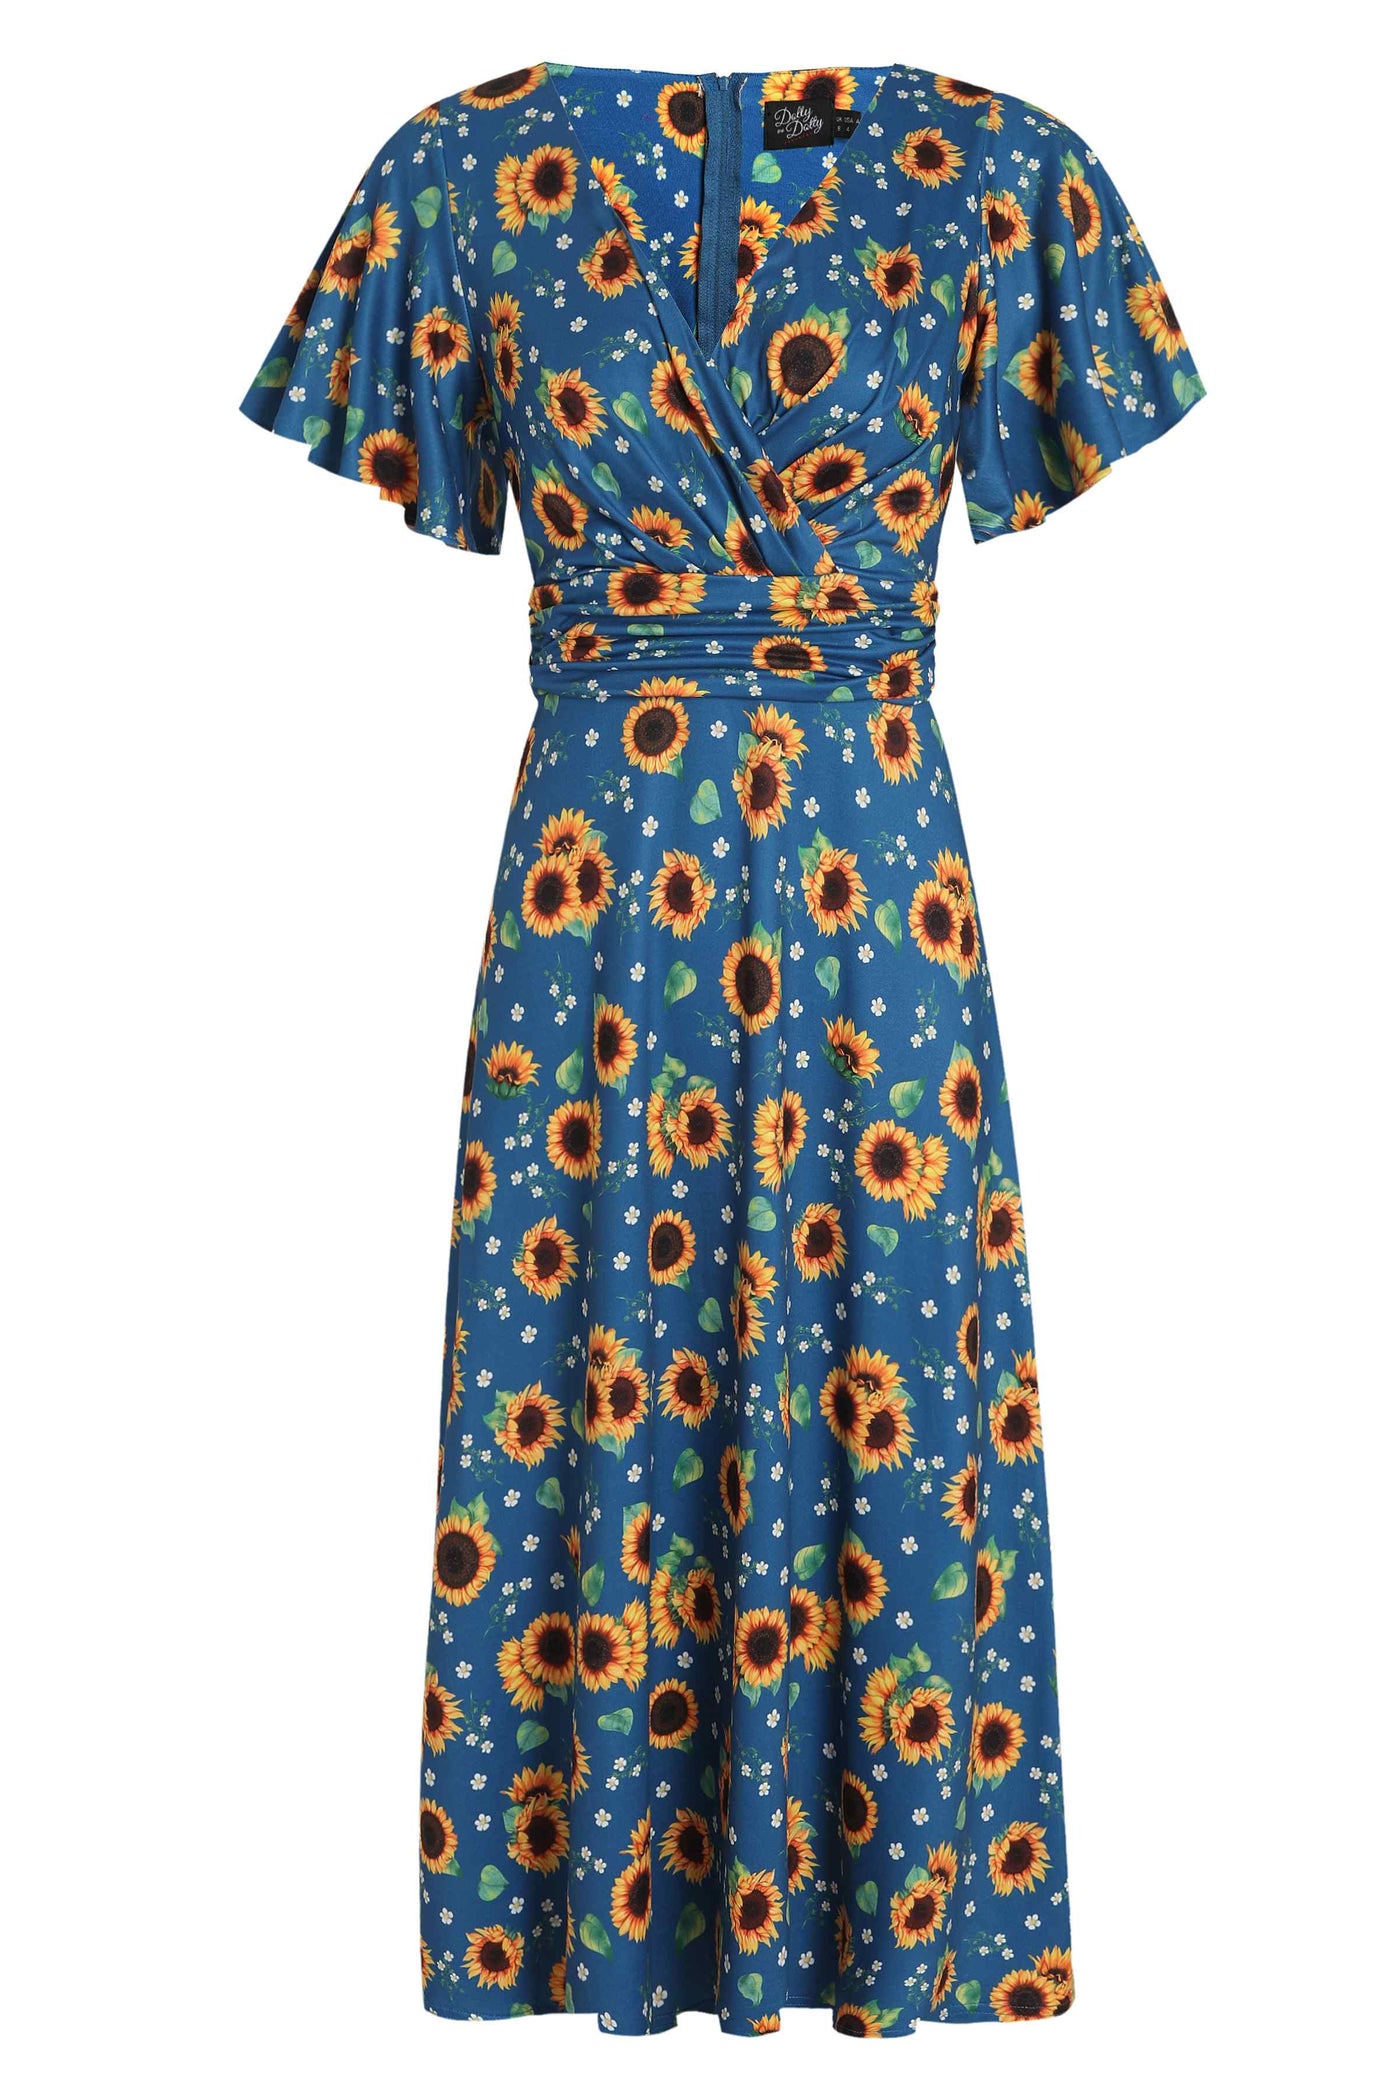 Crossover Bust Blue Sunflower Dress